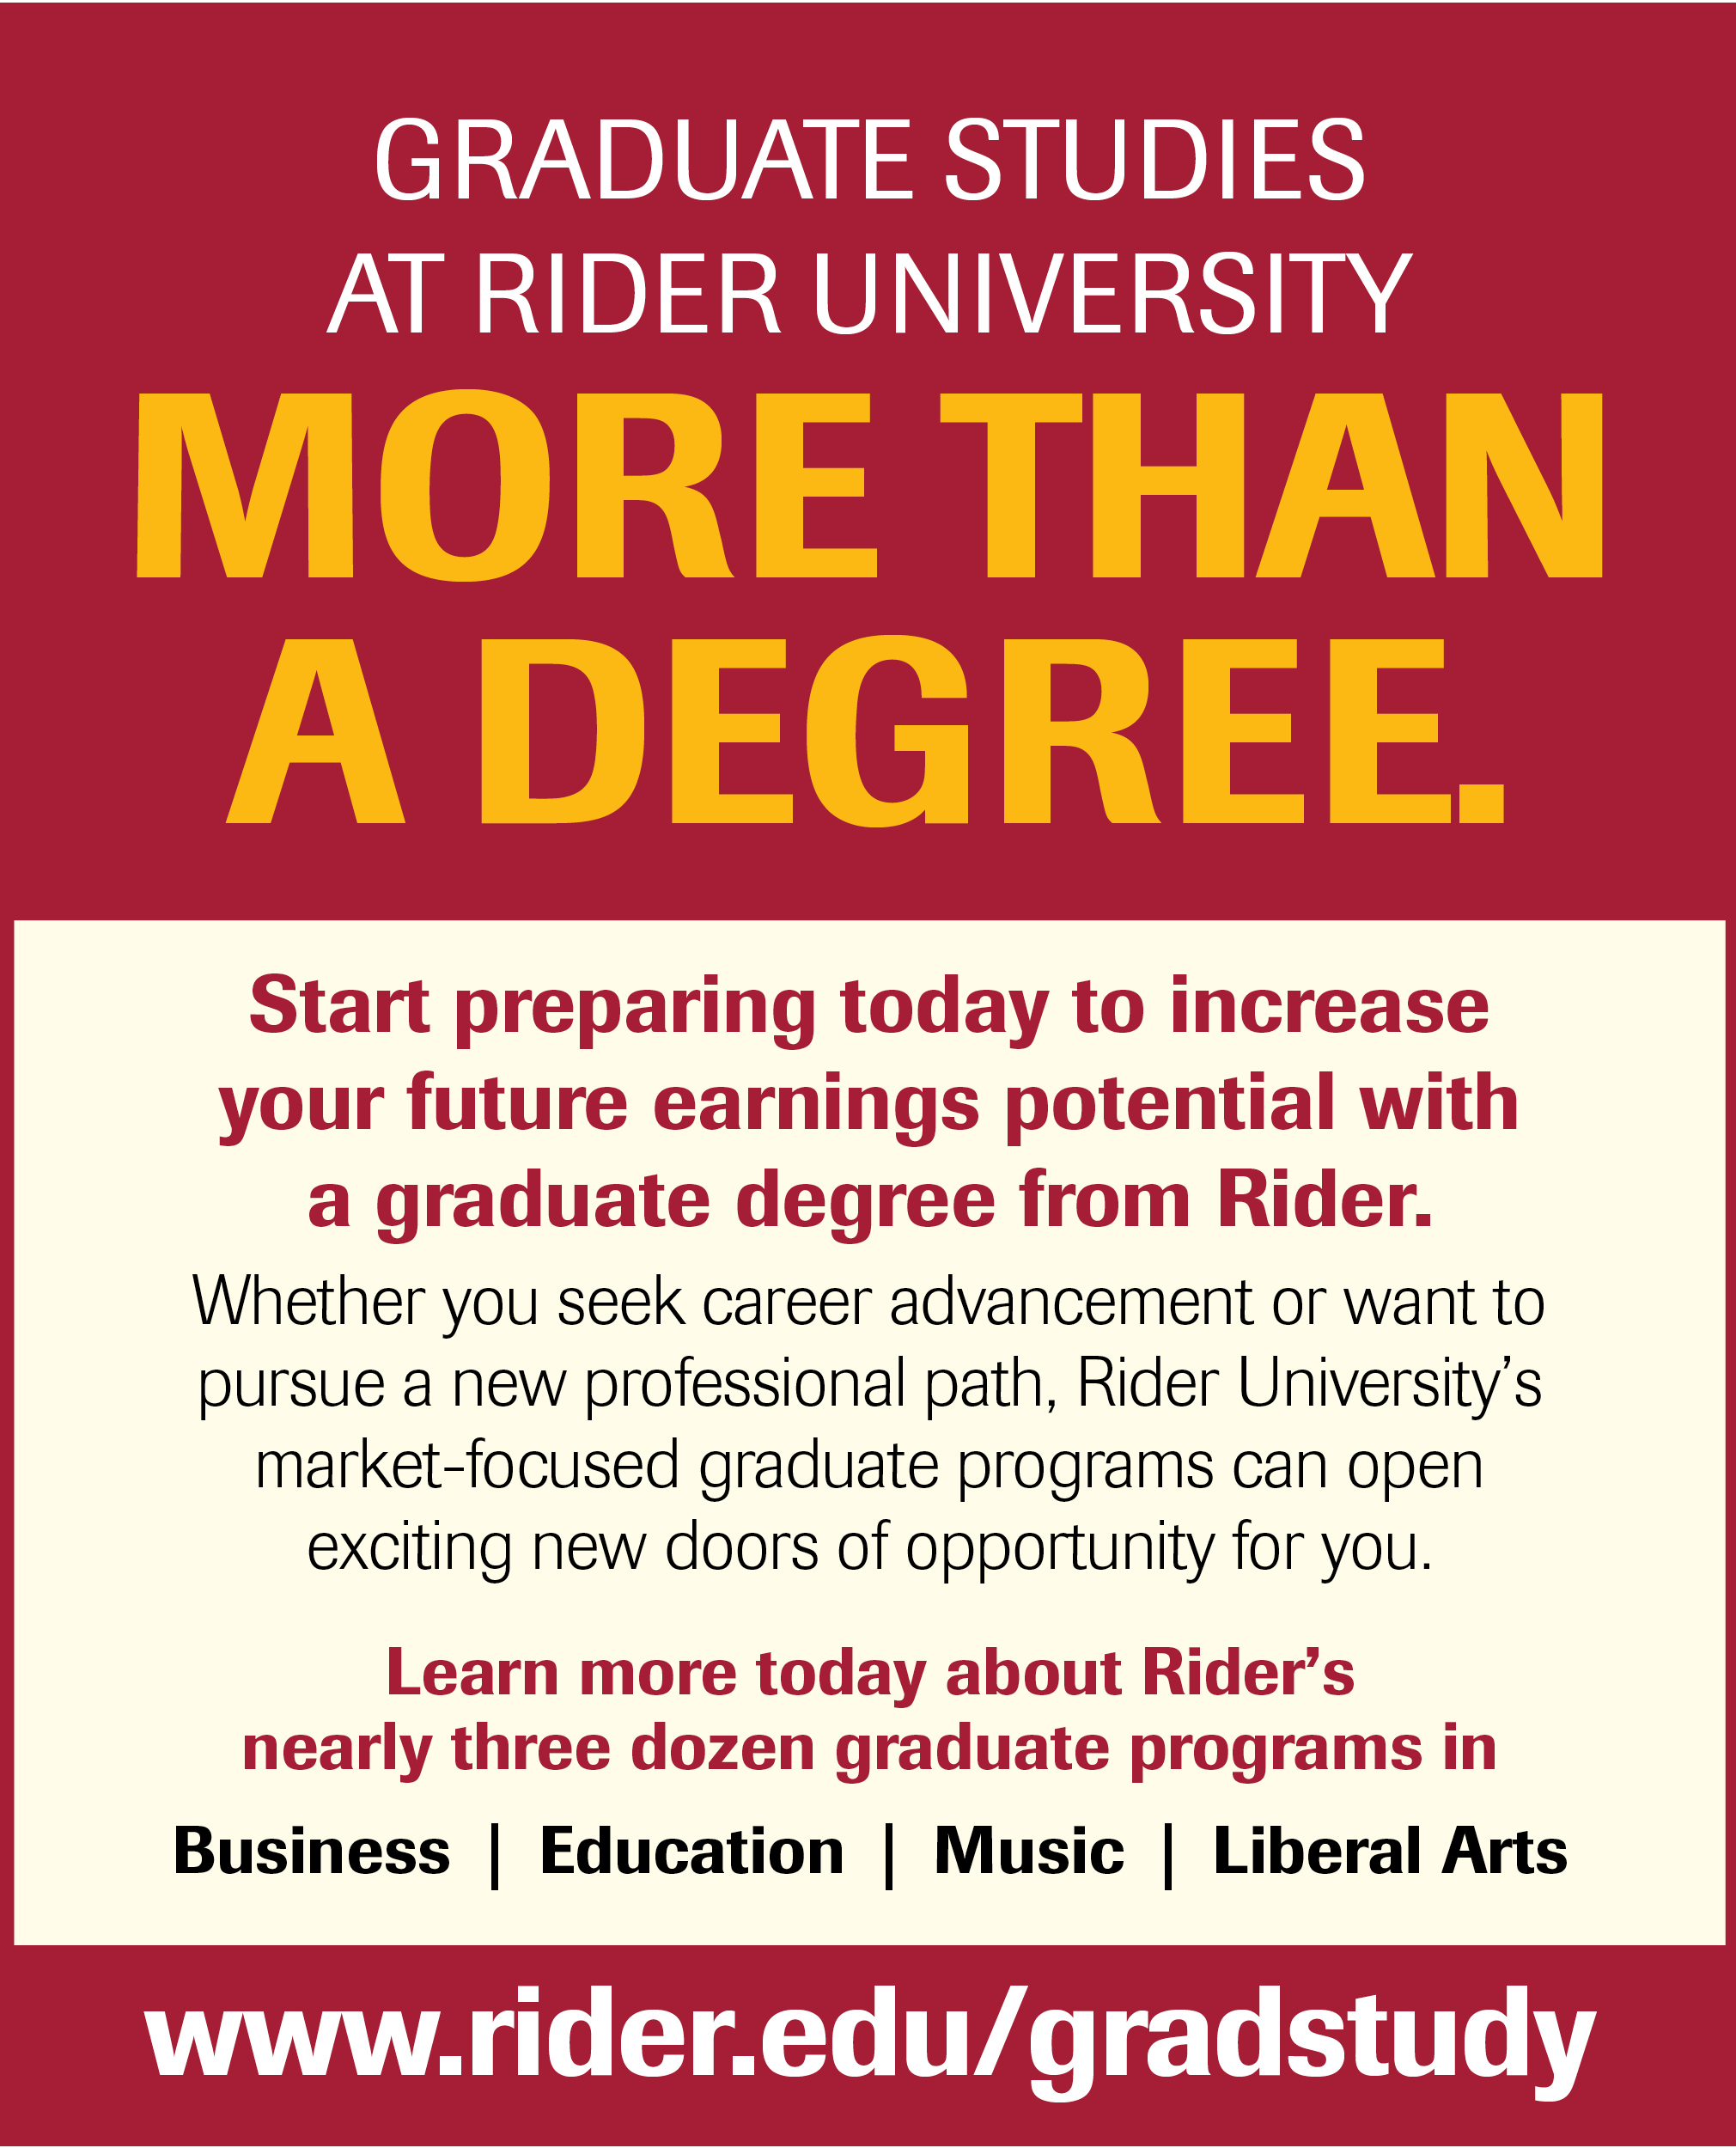 Graduate studies at Rider University